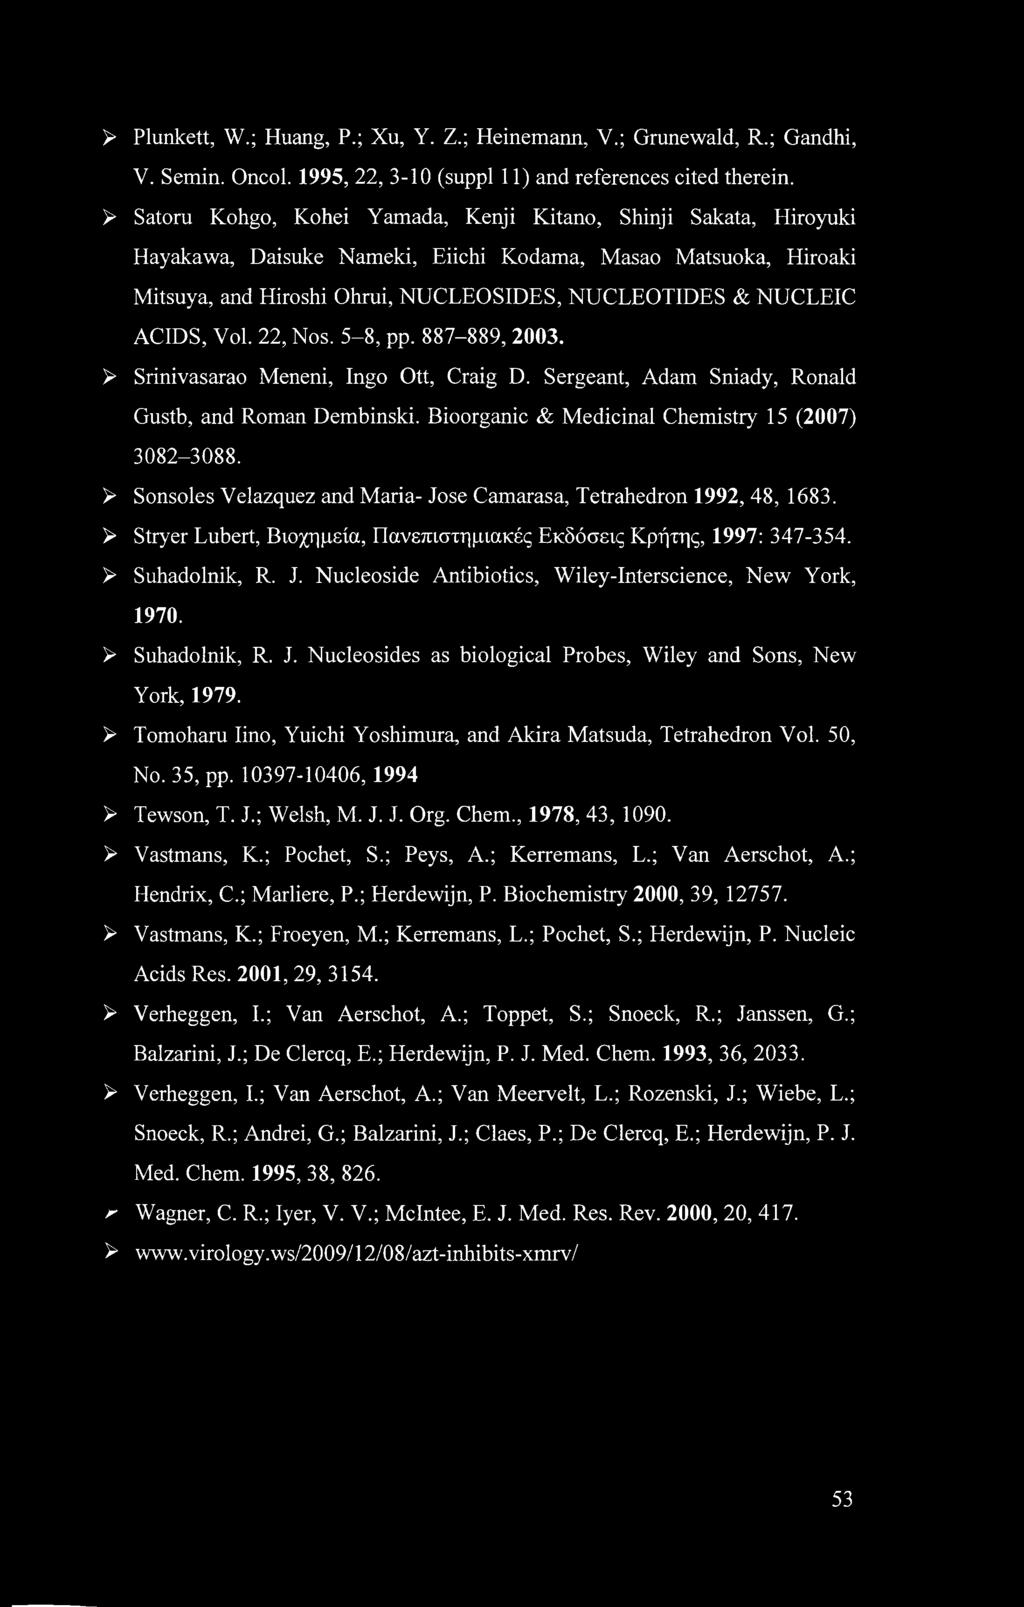 ACIDS, Vol. 22, Nos. 5-8, pp. 887-889, 2003. > Srinivasarao Meneni, Ingo Ott, Craig D. Sergeant, Adam Sniady, Ronald Gustb, and Roman Dembinski. Bioorganic & Medicinal Chemistry 15 (2007) 3082-3088.